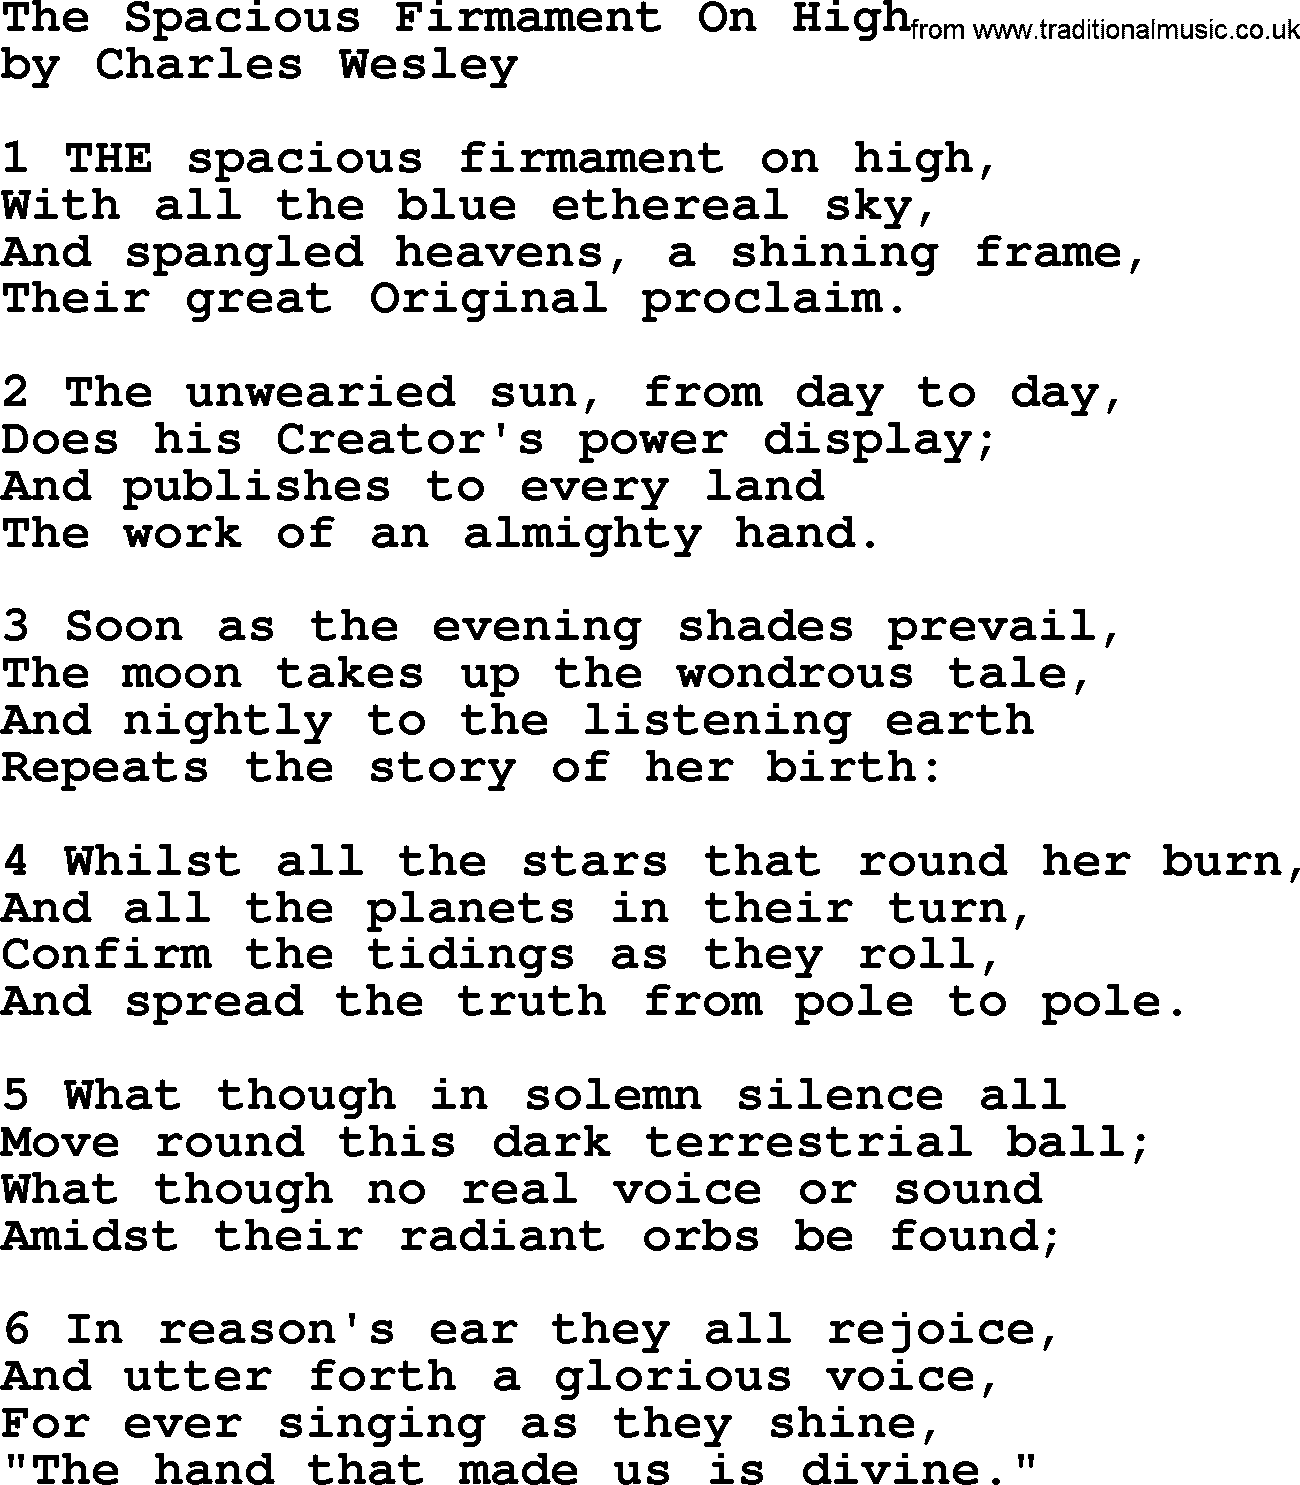 Charles Wesley hymn: The Spacious Firmament On High, lyrics